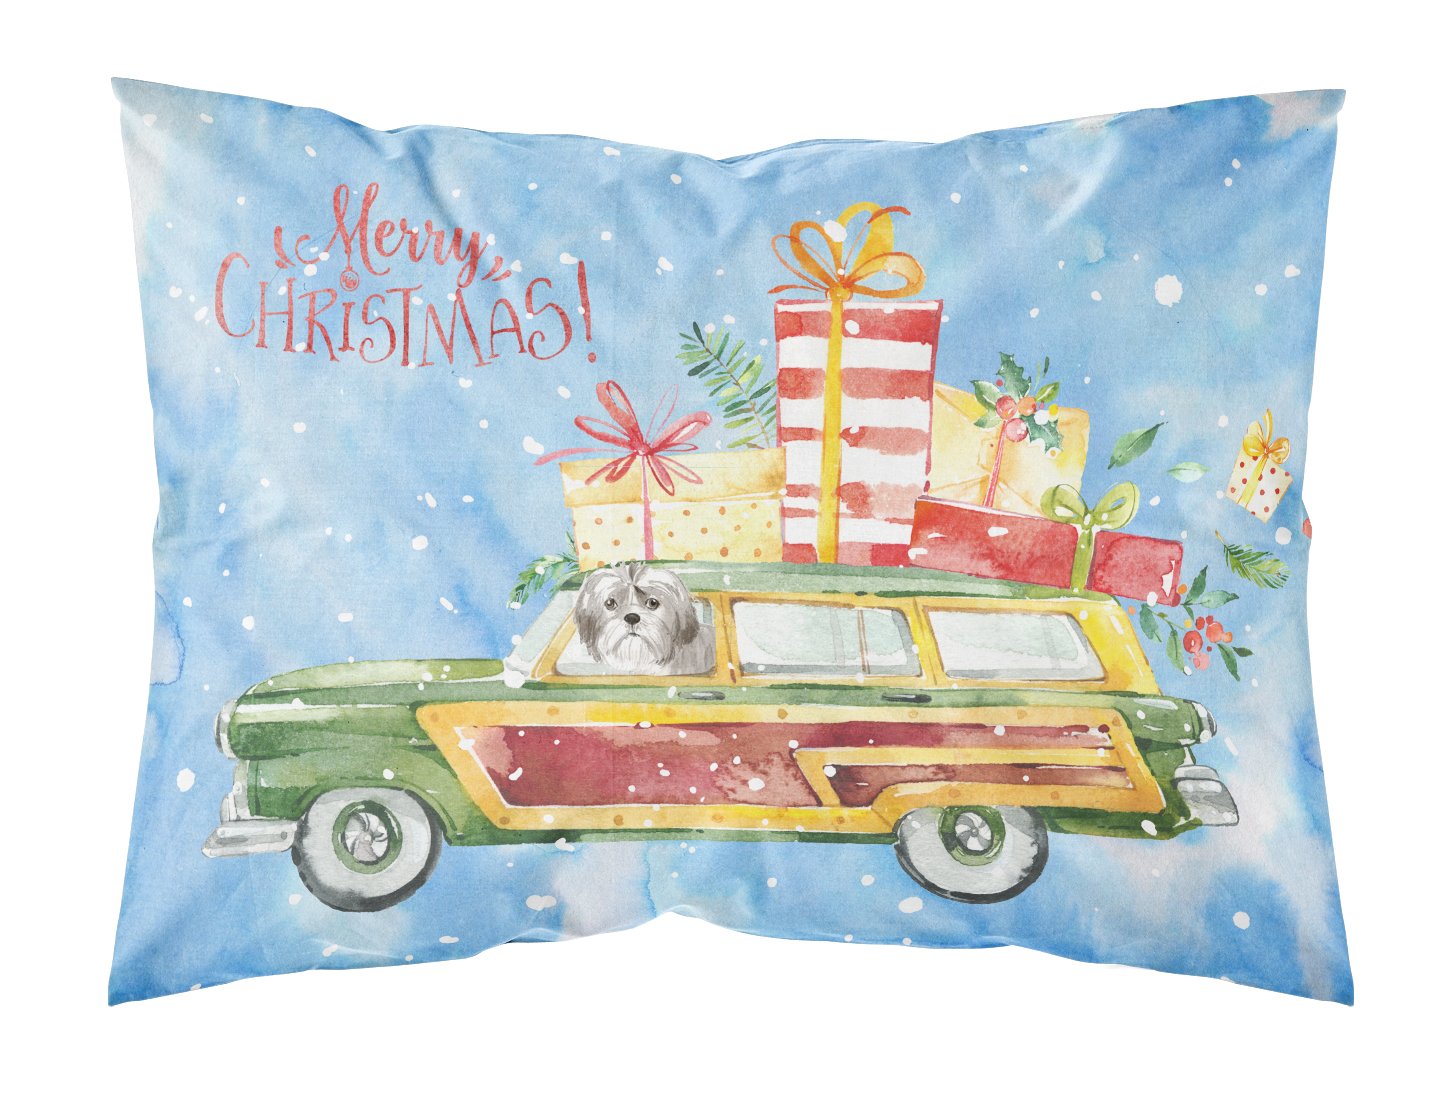 Merry Christmas Shih Tzu Puppy Cut Fabric Standard Pillowcase CK2423PILLOWCASE by Caroline's Treasures